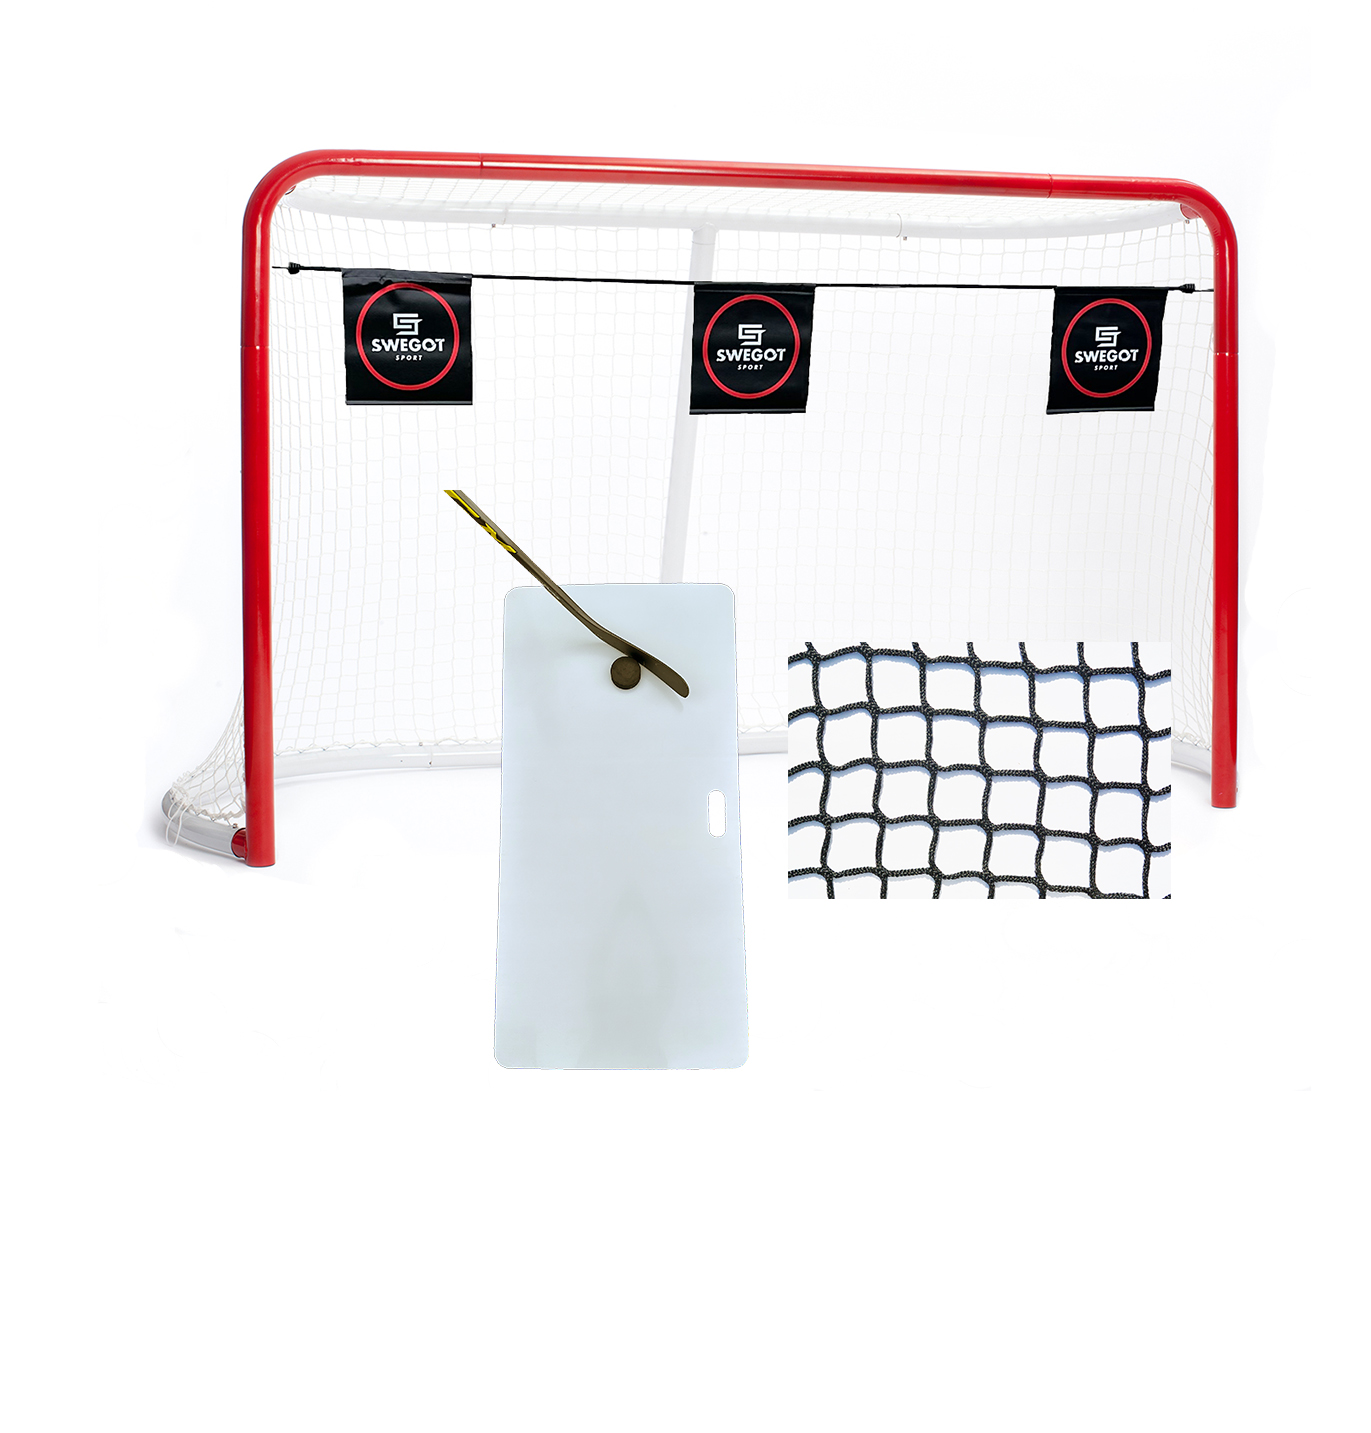 Hockey Goal, Goaltarget, Shootingpad and safety net